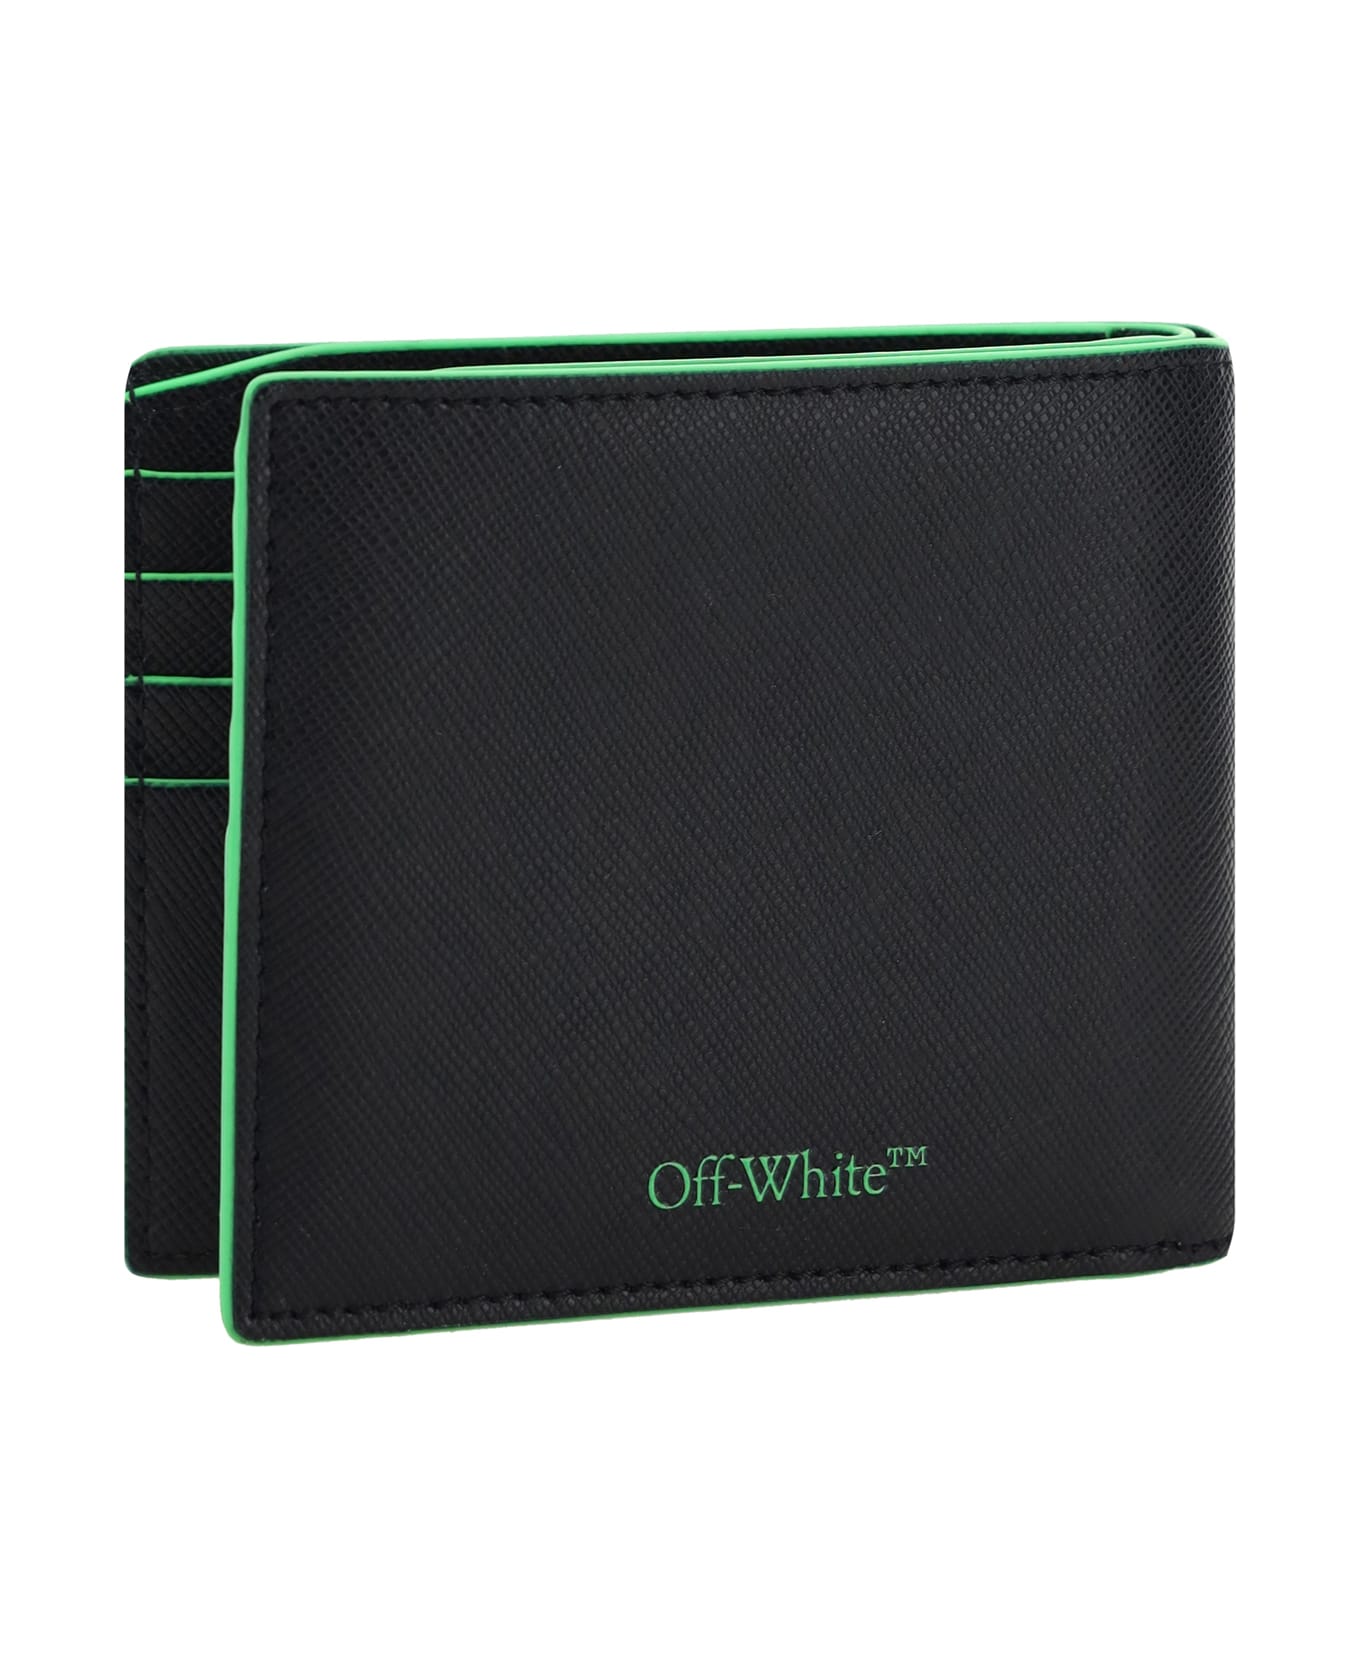 Off-White Wallet - Black Green Fluo